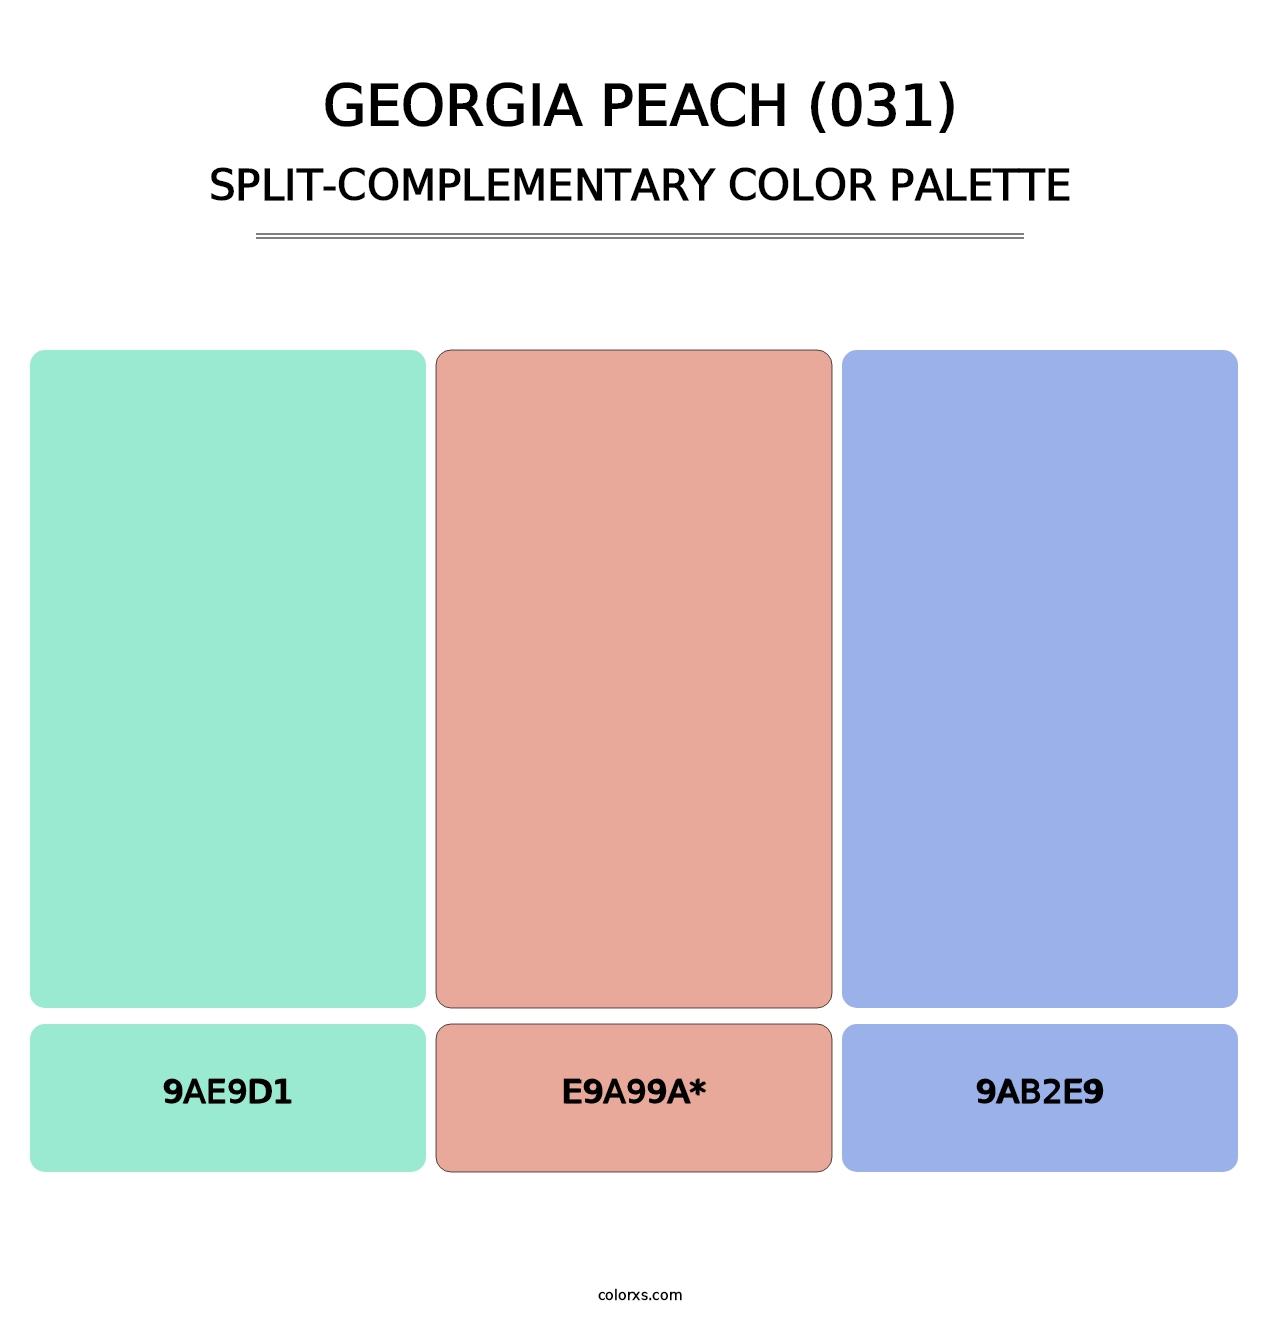 Georgia Peach (031) - Split-Complementary Color Palette